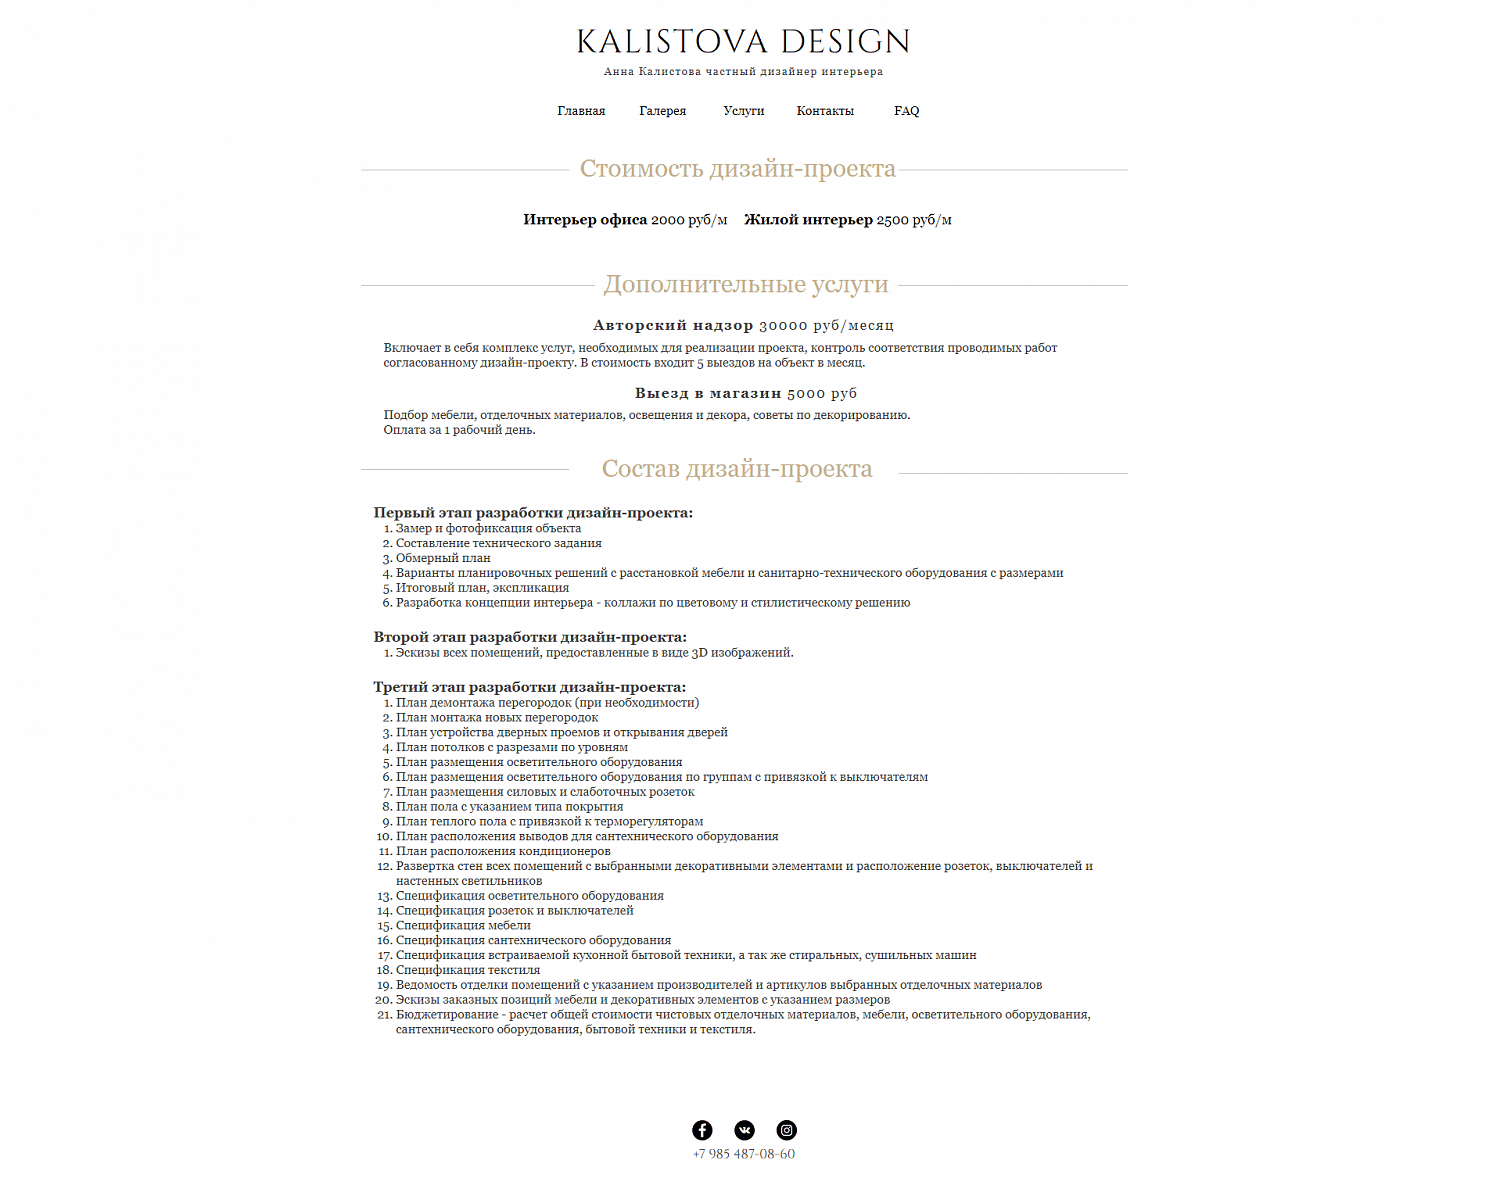 Interior designer KALISTOVA DESIGN